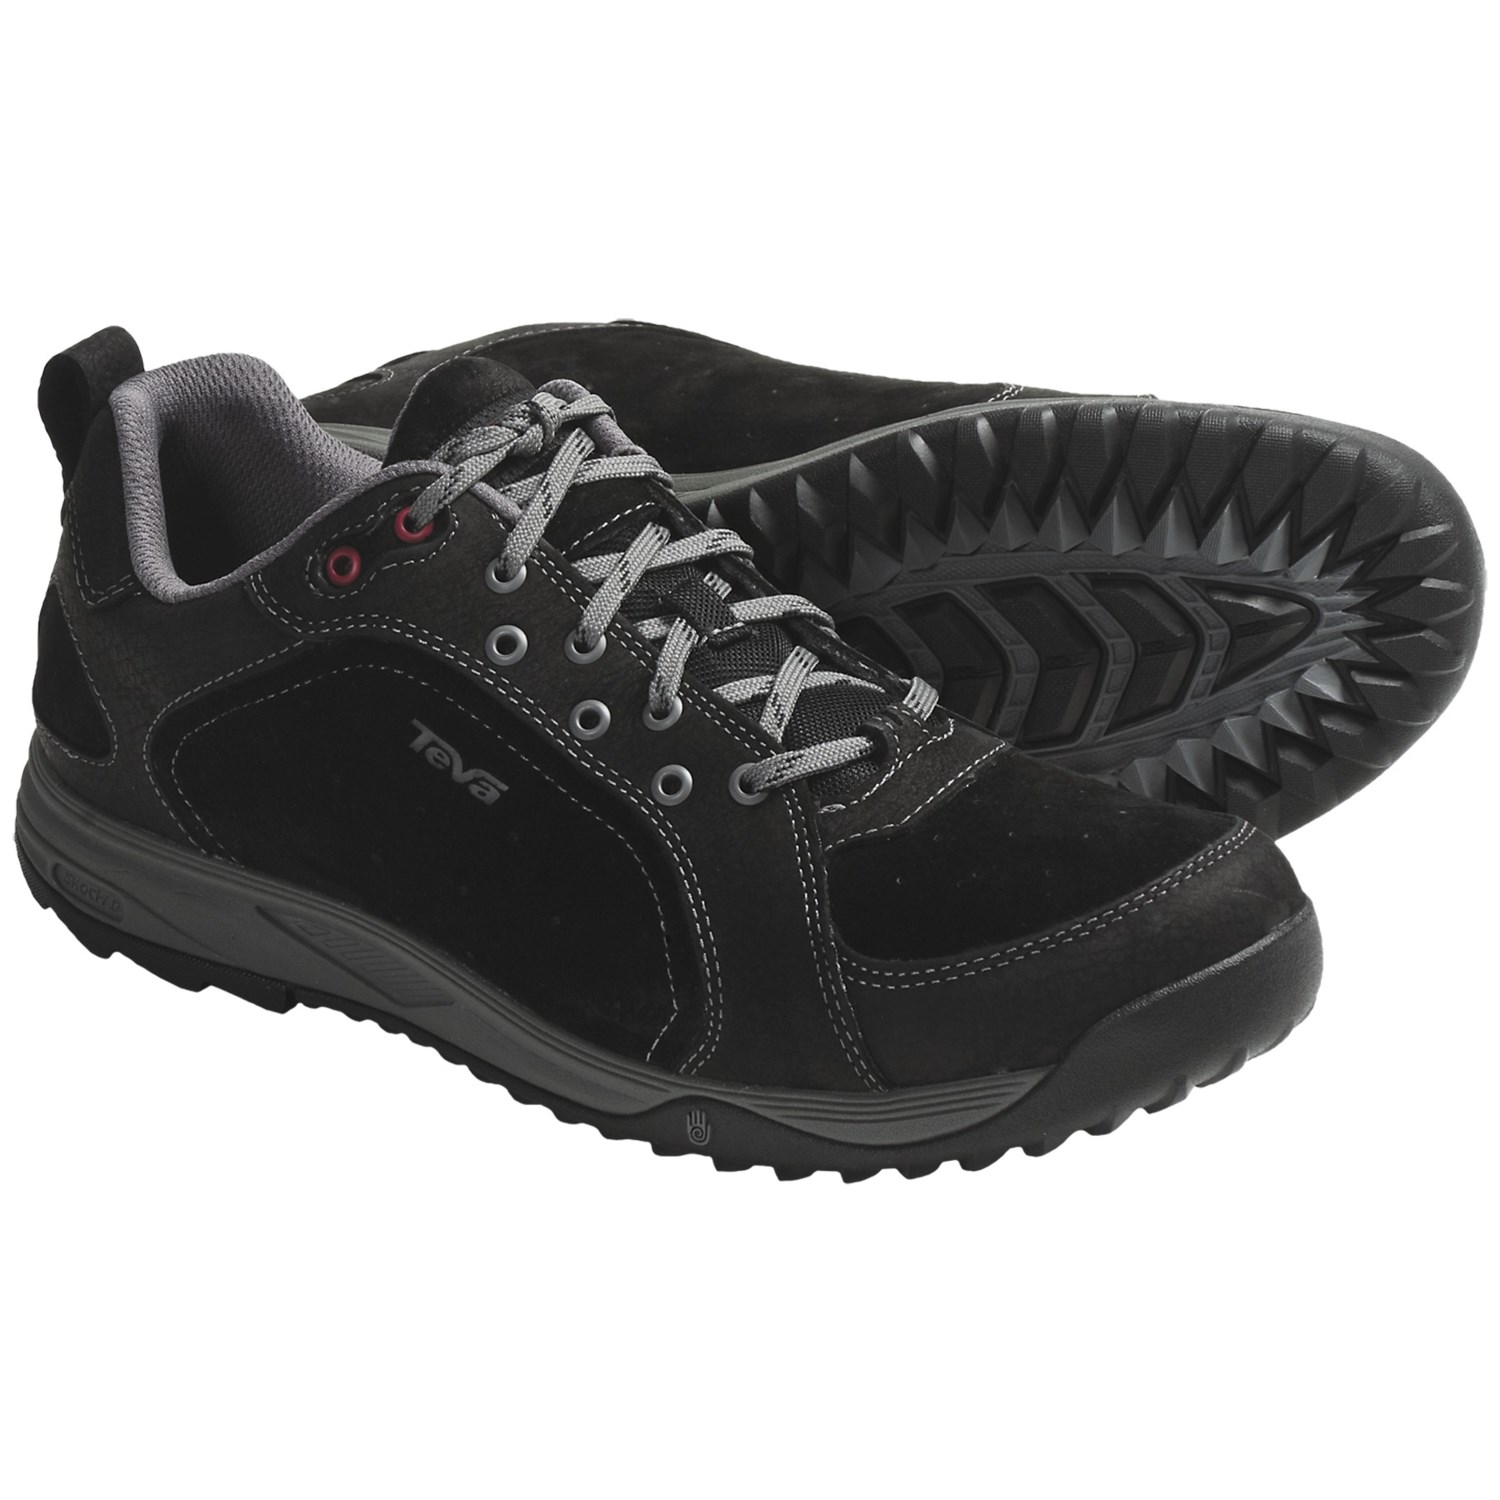 Teva Bishop Peak Shoes   Leather Suede (For Men)   Save 37% 